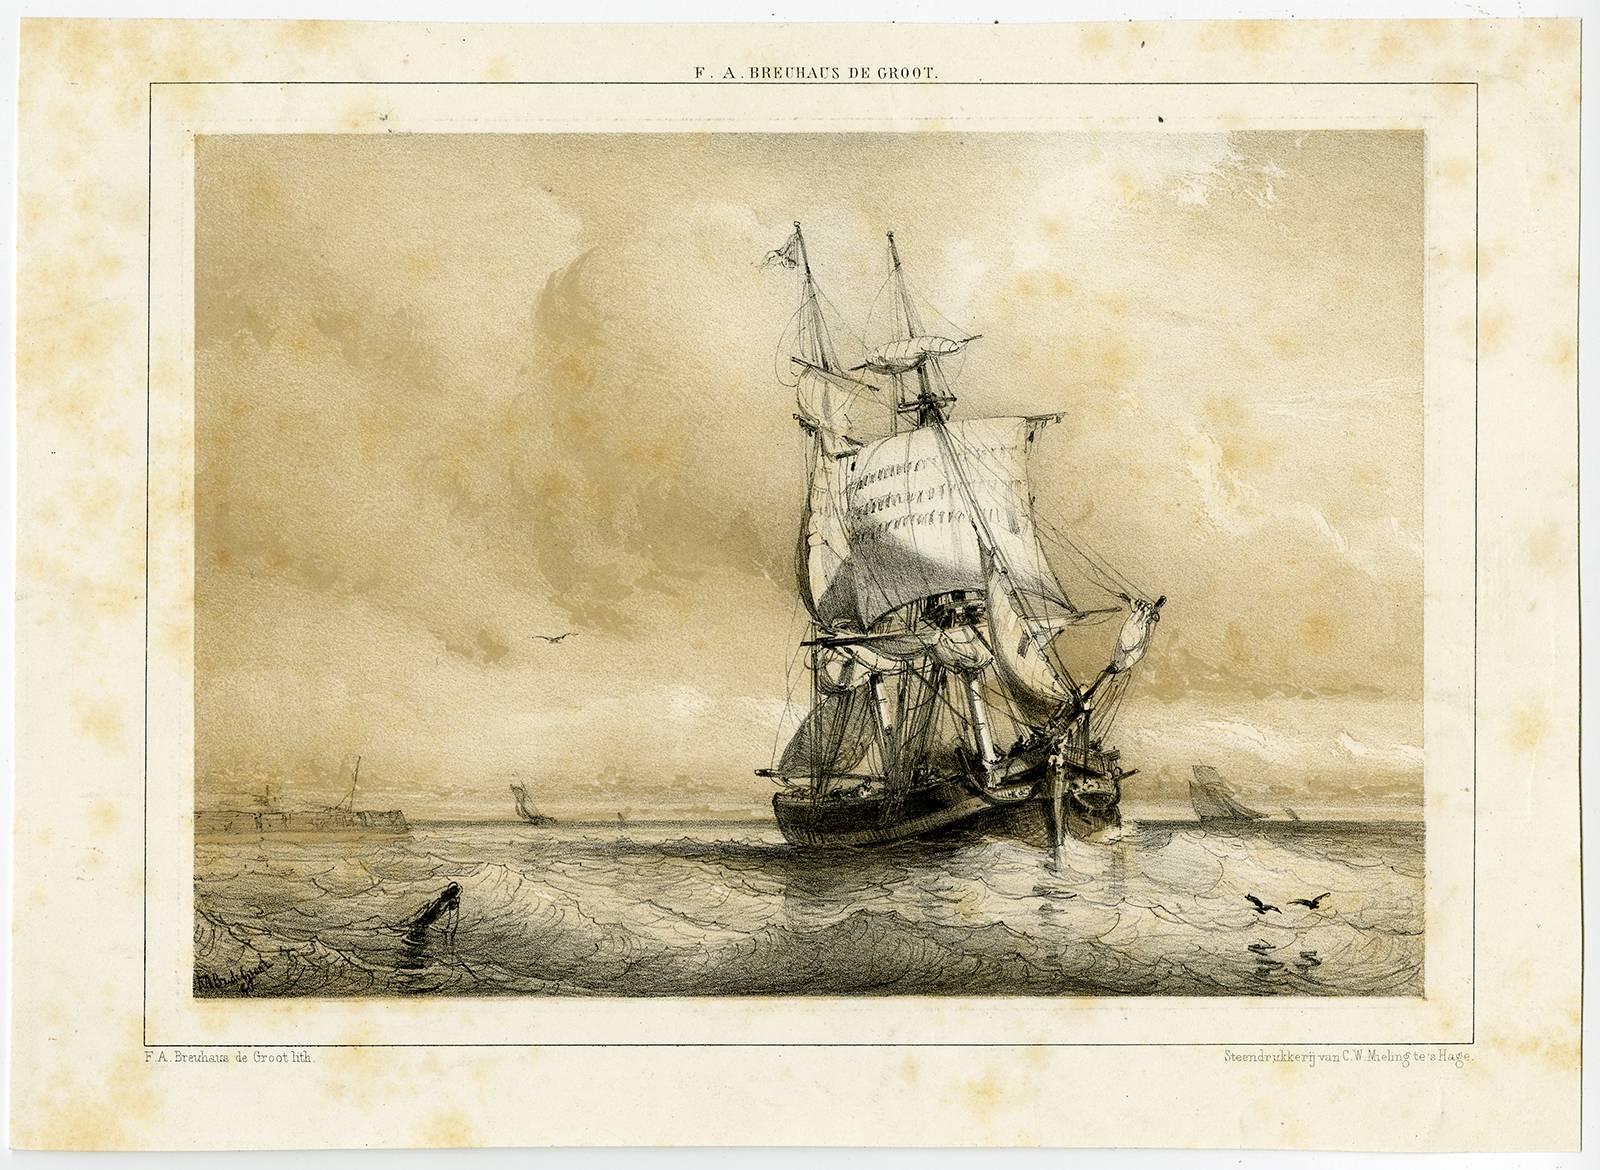 Frans Arnold Breuhaus de Groot Landscape Print - F.A. Breuhaus de Groot - Ship at sea.